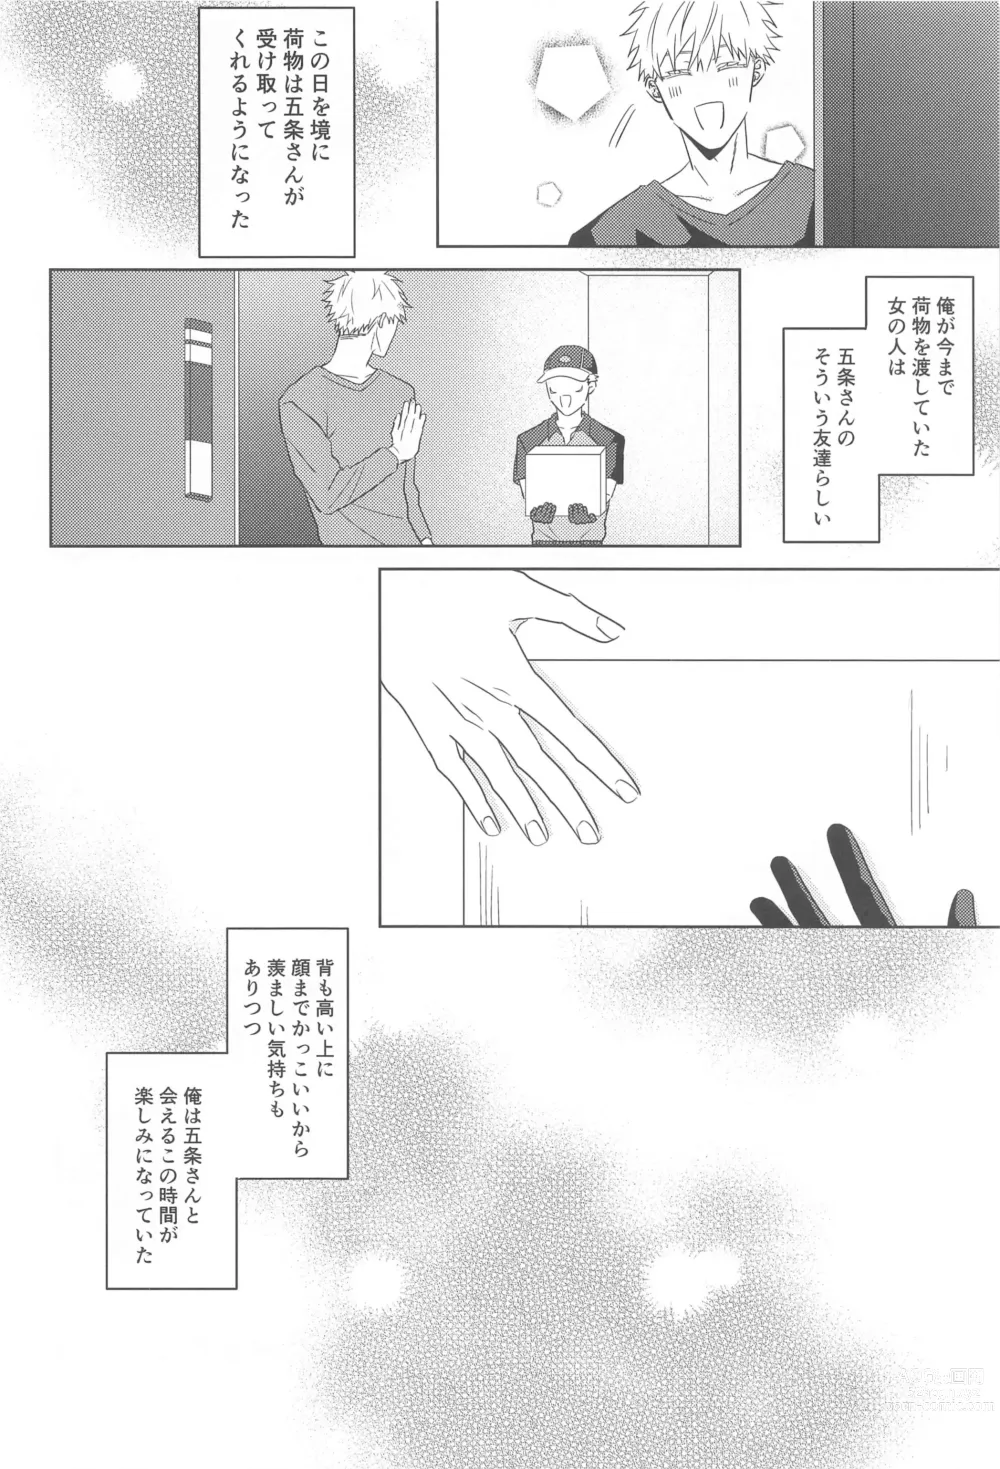 Page 11 of doujinshi Doushite Kounatta?!